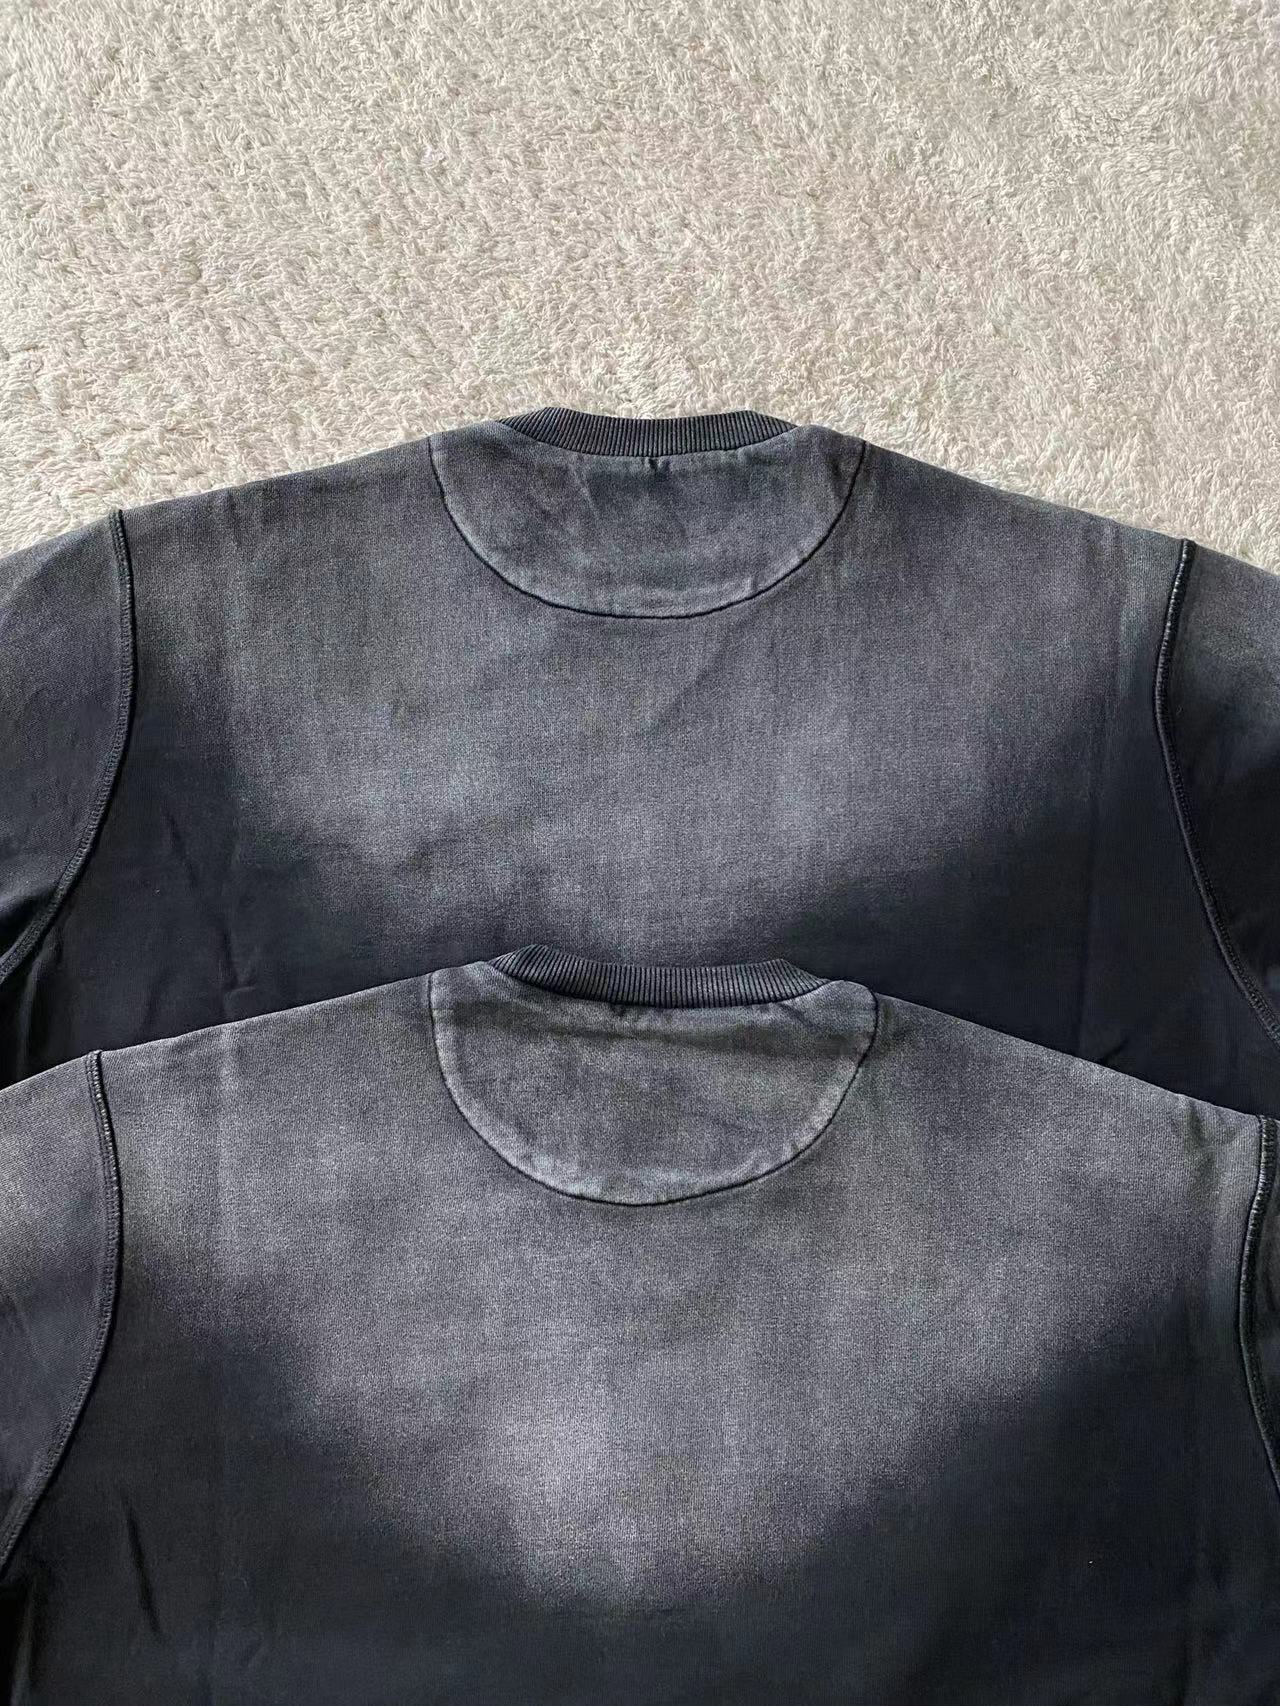 Black grey Jersey